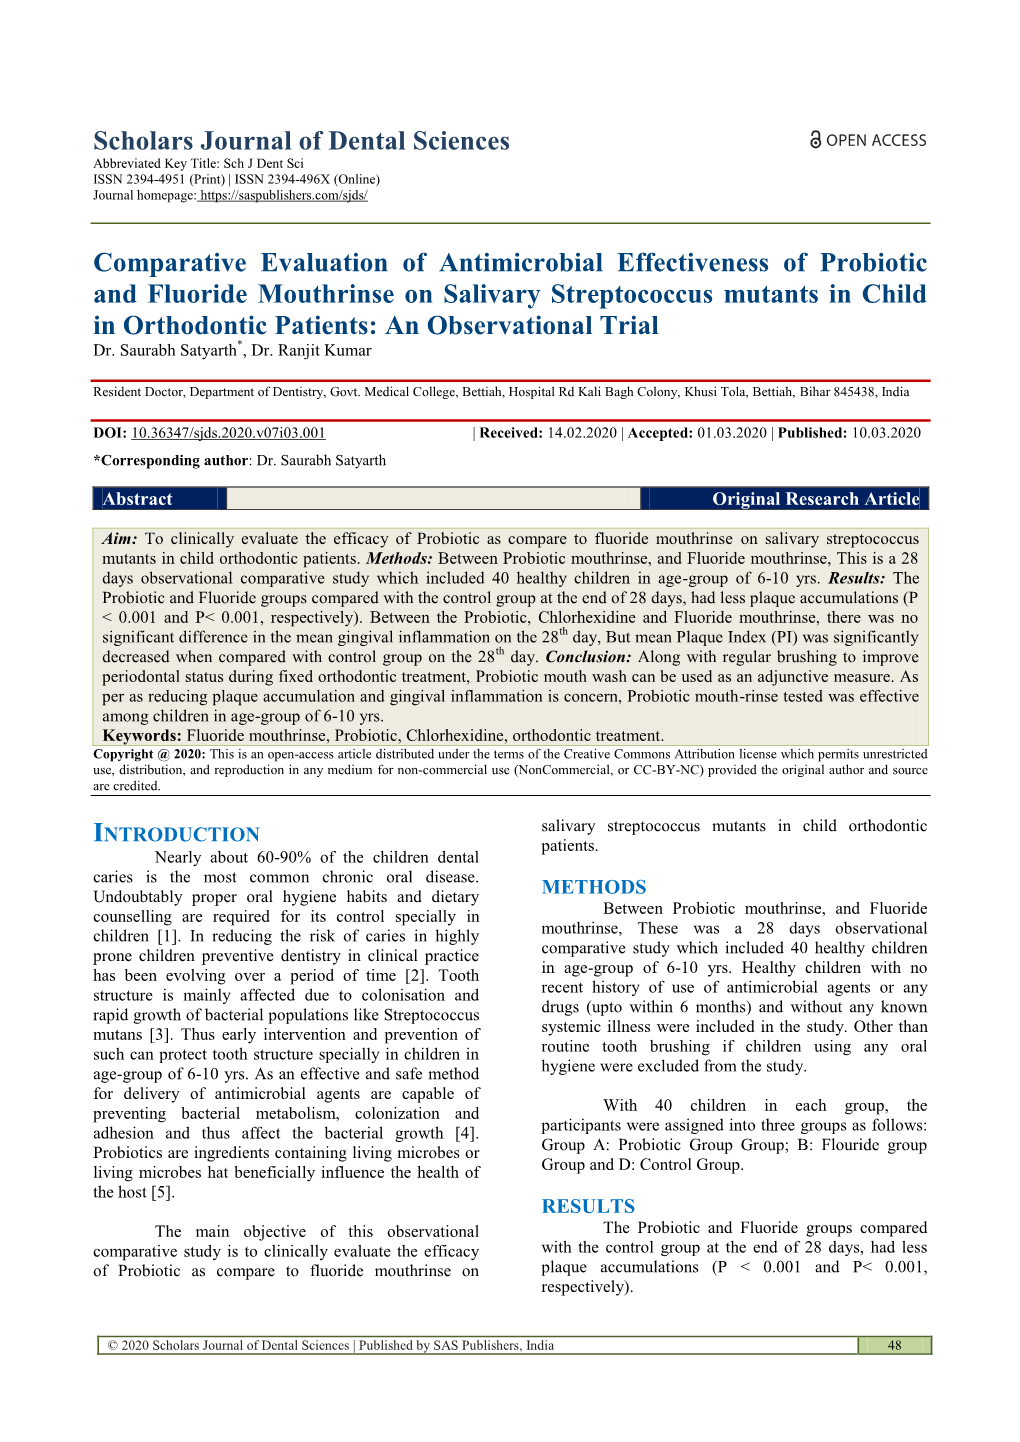 Scholars Journal of Dental Sciences Comparative Evaluation Of